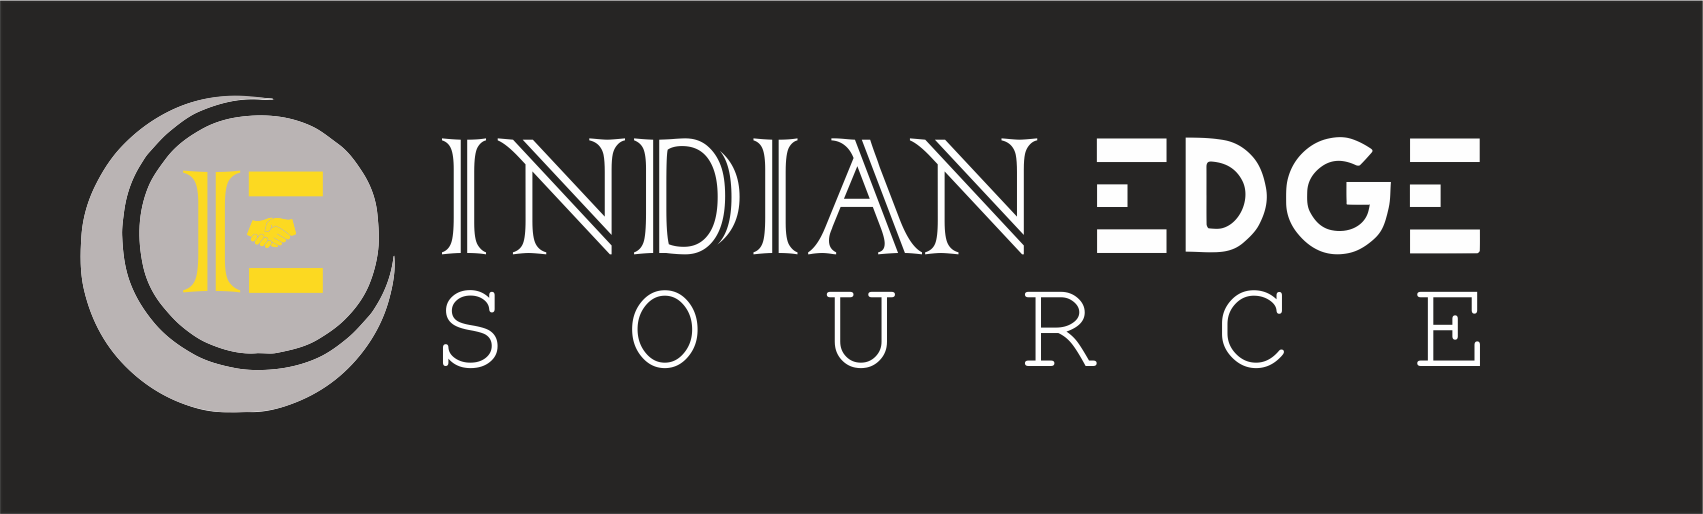 Indian Edge Source